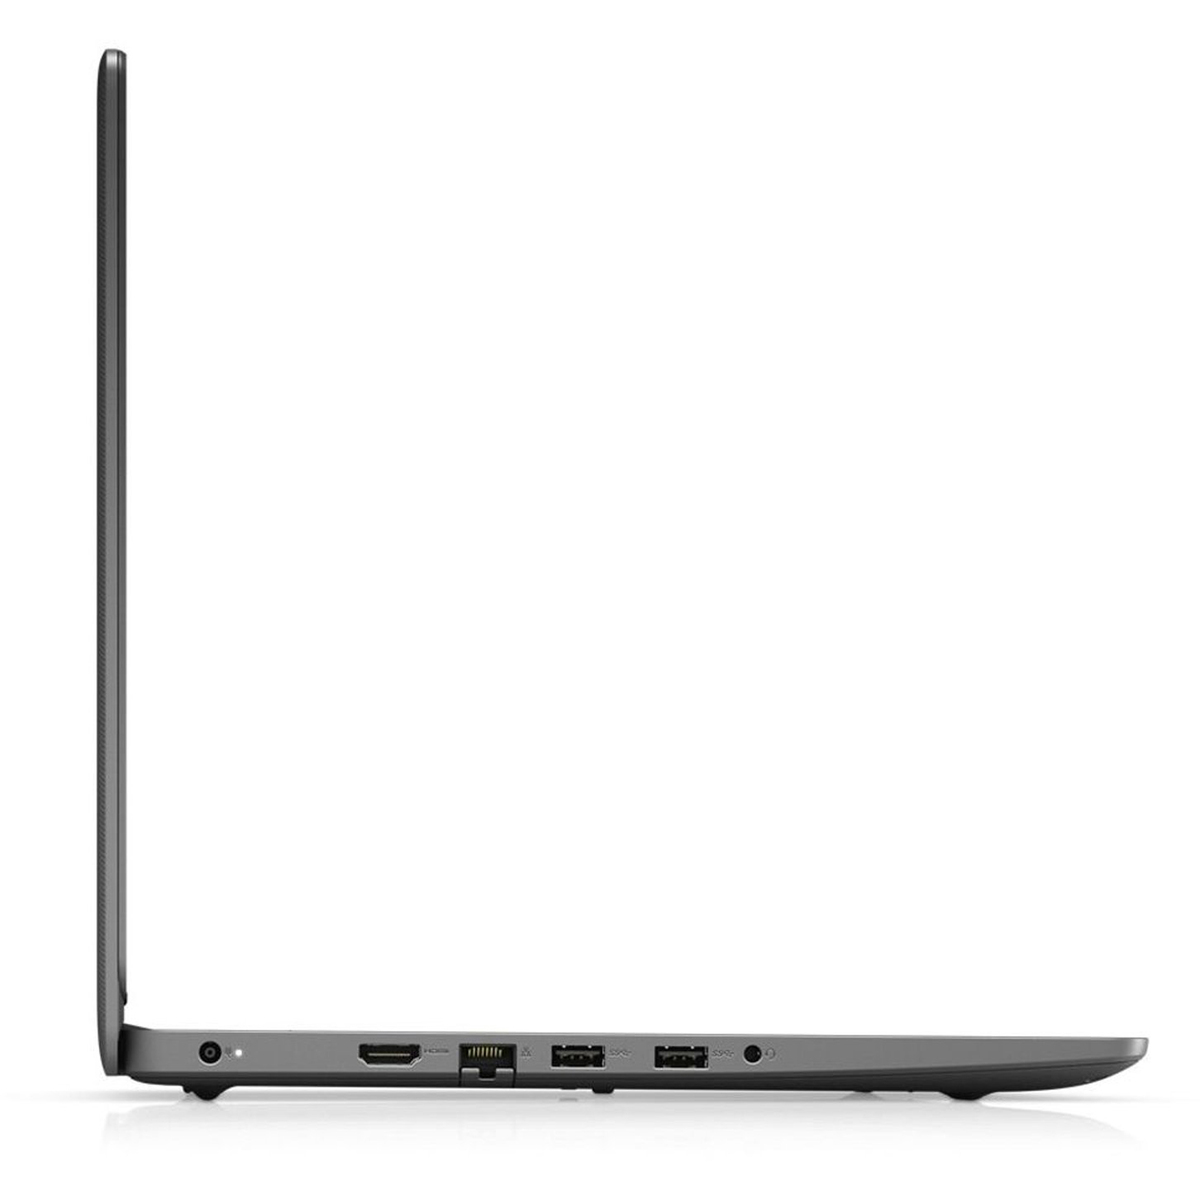 Dell Vostro 3400-VOS 4030 BLK- Laptop – 11th Gen Core i5,8GB RAM,256GB SSD+1TB HDD, 2GB GeForce(R) MX330, Windows10Home, HD 14inch,Black,English/Arabic Keyboard,Middle East Version